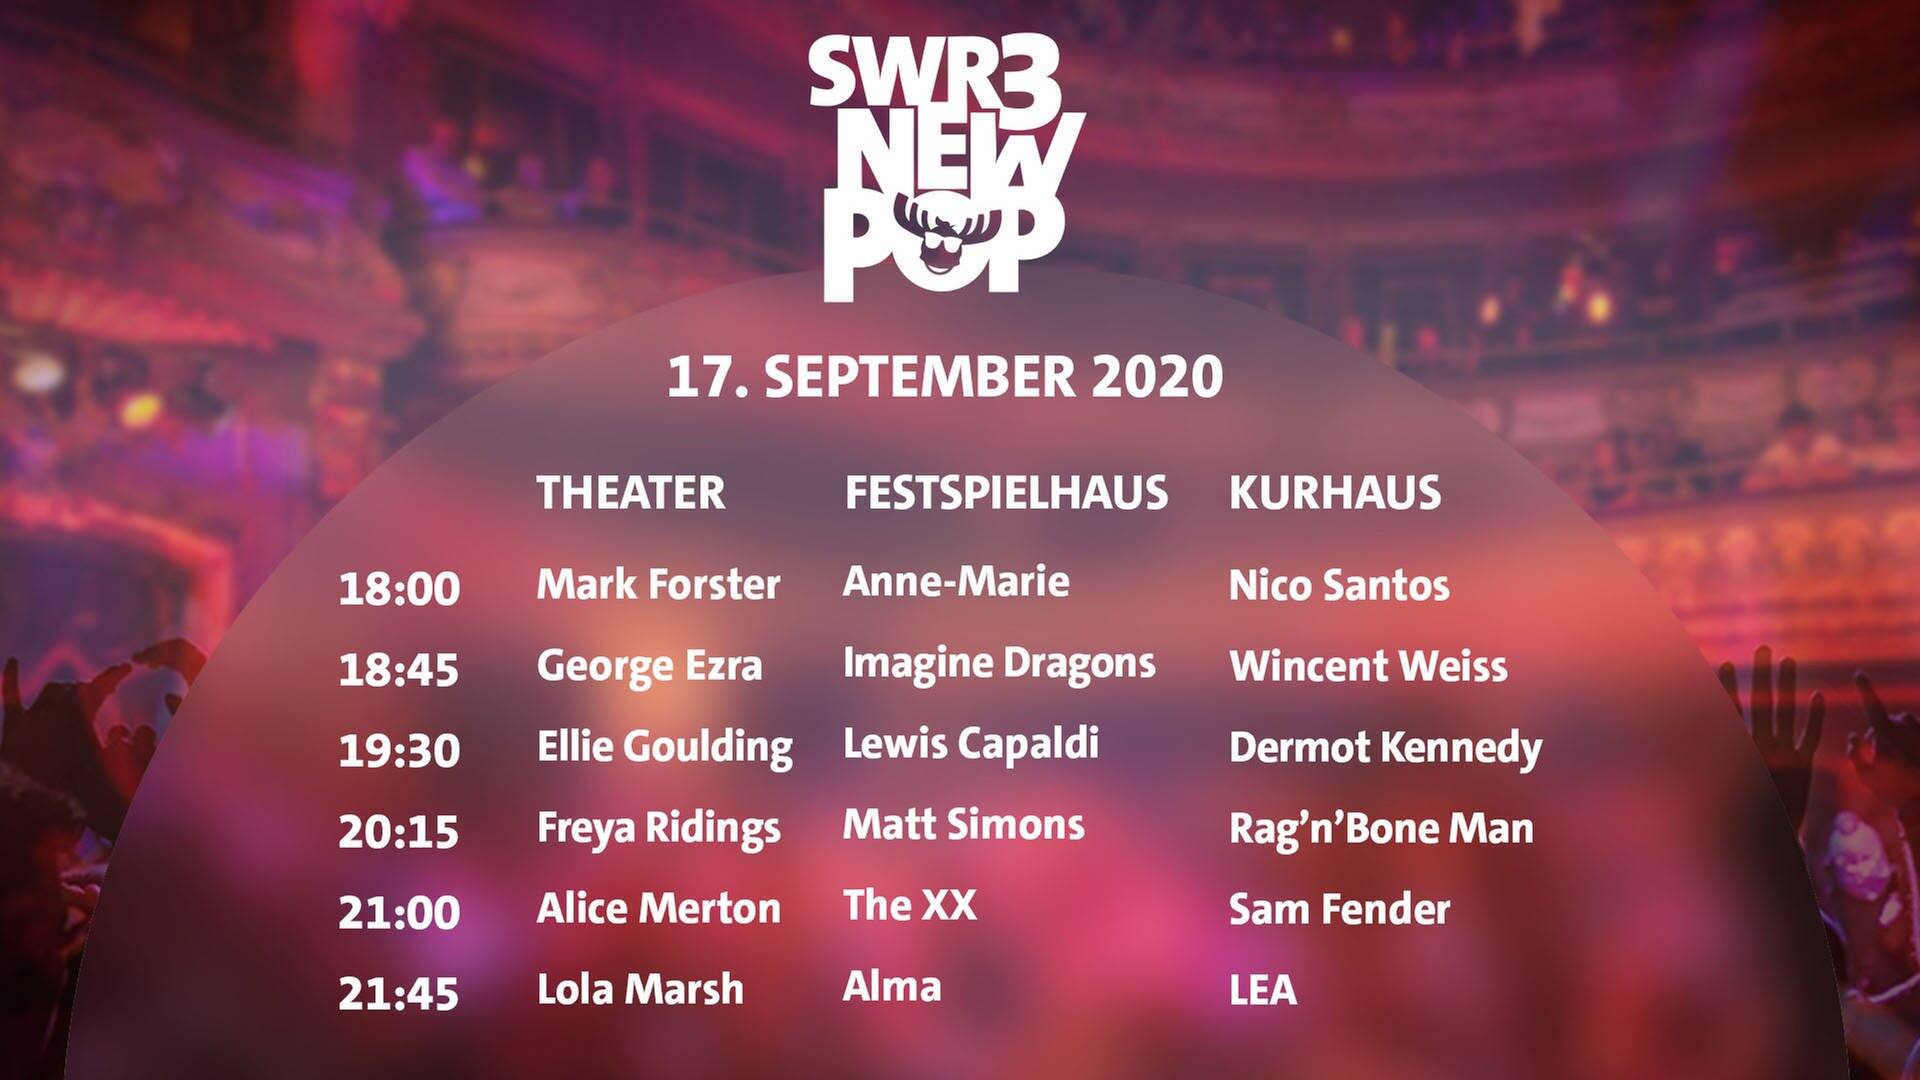 Festival-Plakat mit Line Up fürs New Pop 2020 (Foto: SWR3)